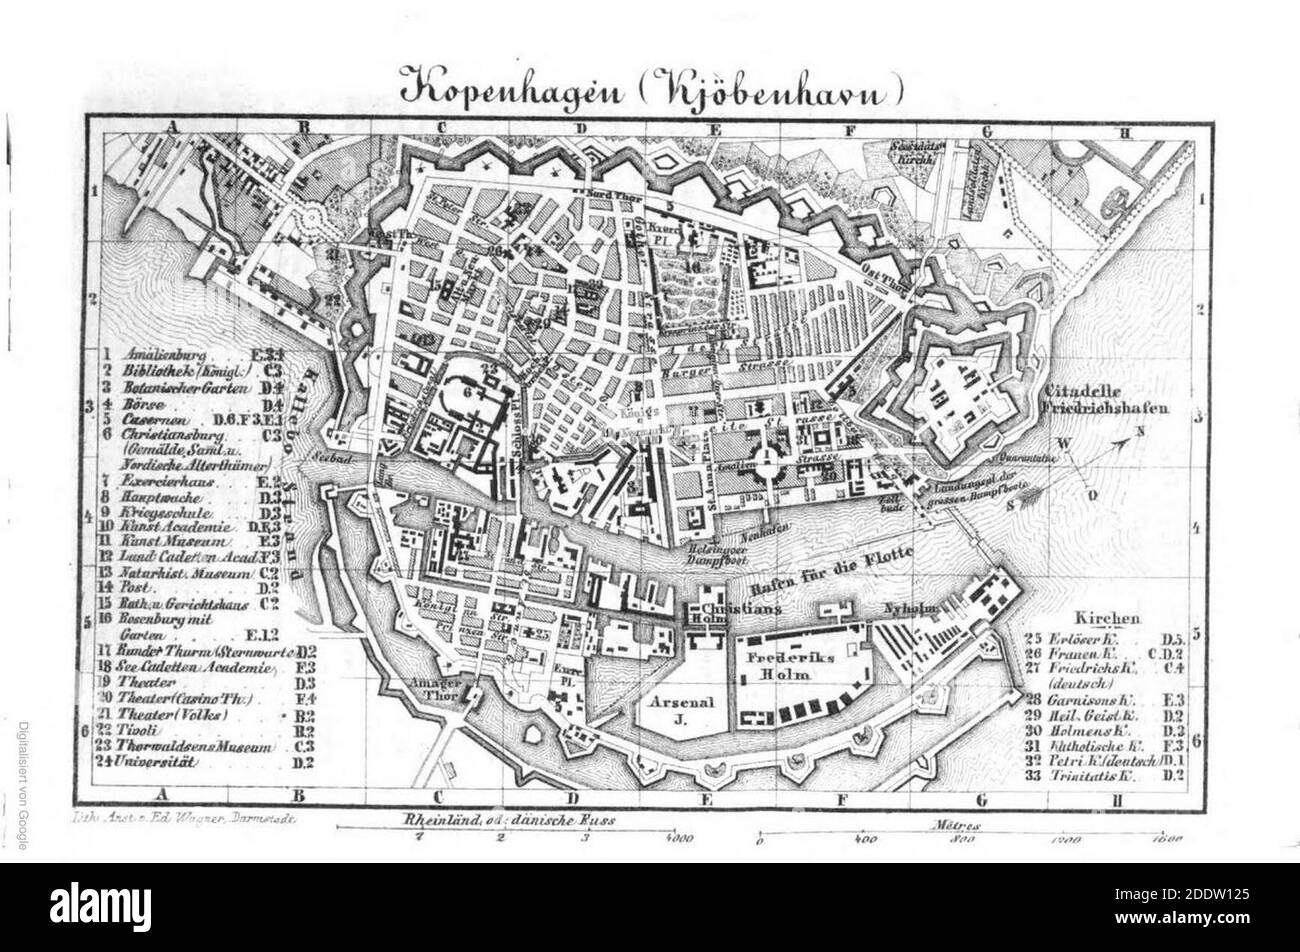 Kopenhagen map 1860. Stock Photo